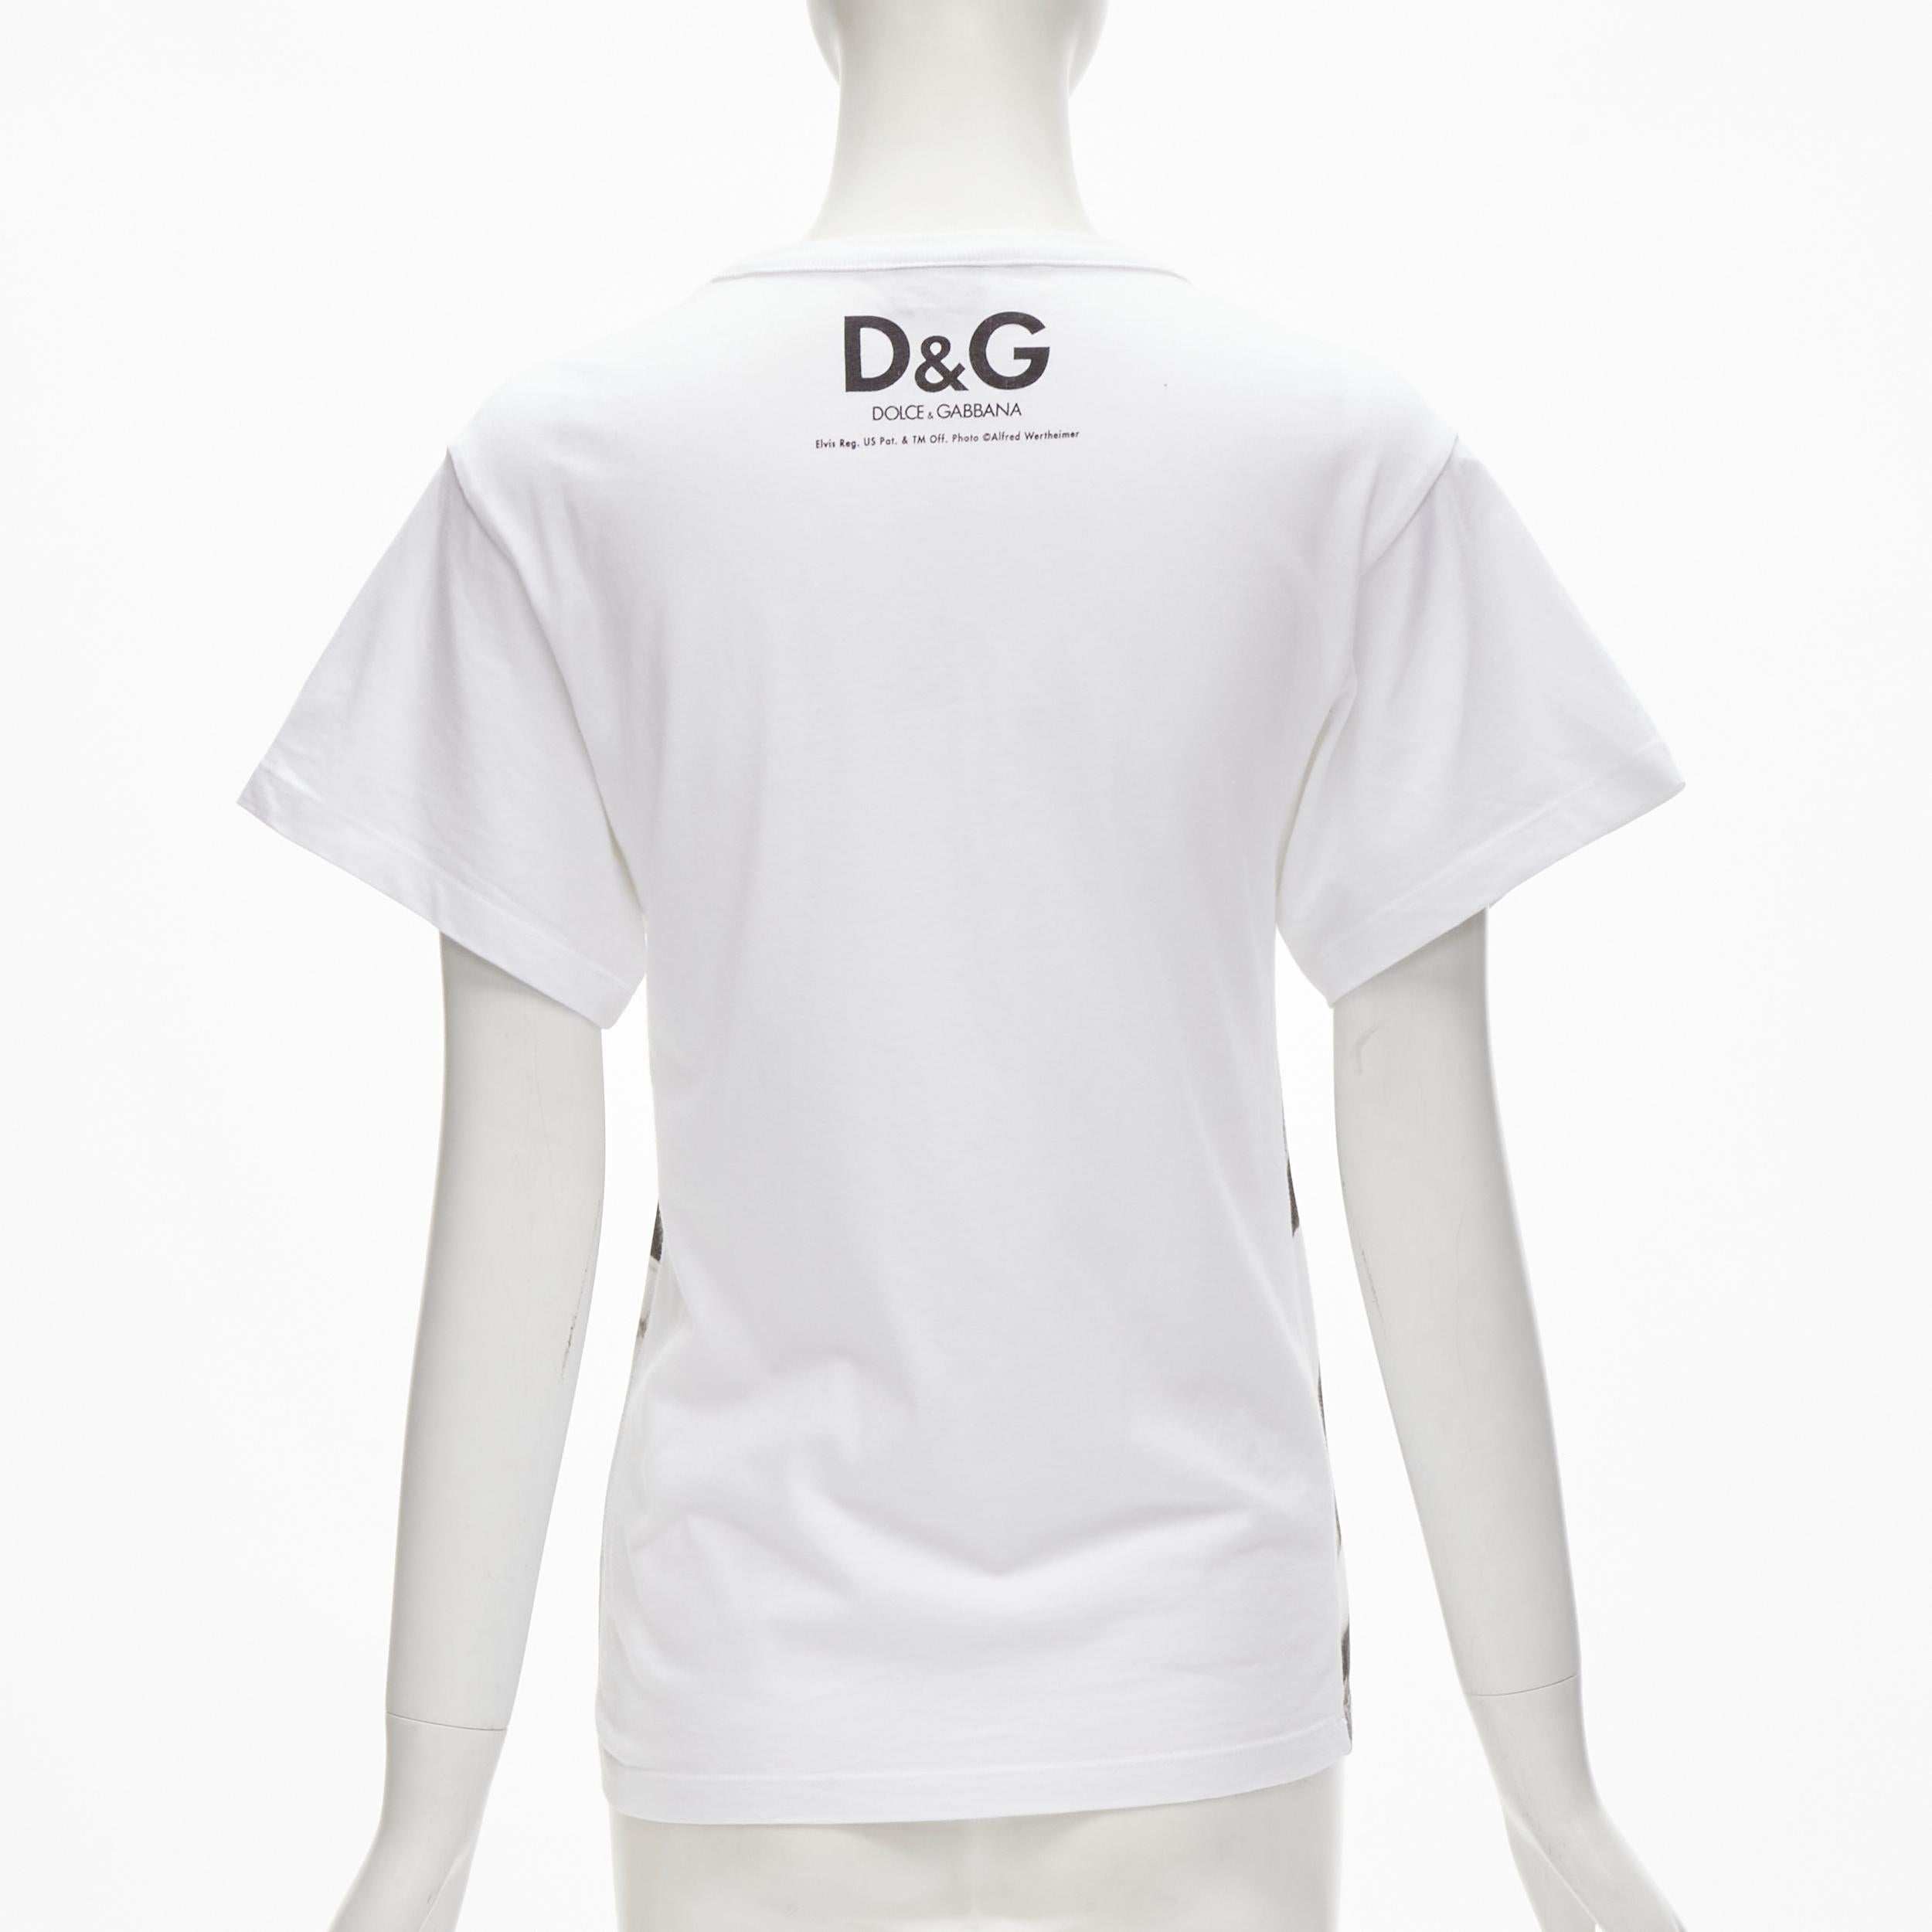 D&G DOLCE GABBANA Elvis Presley Y2K photo print white tshirt S 1